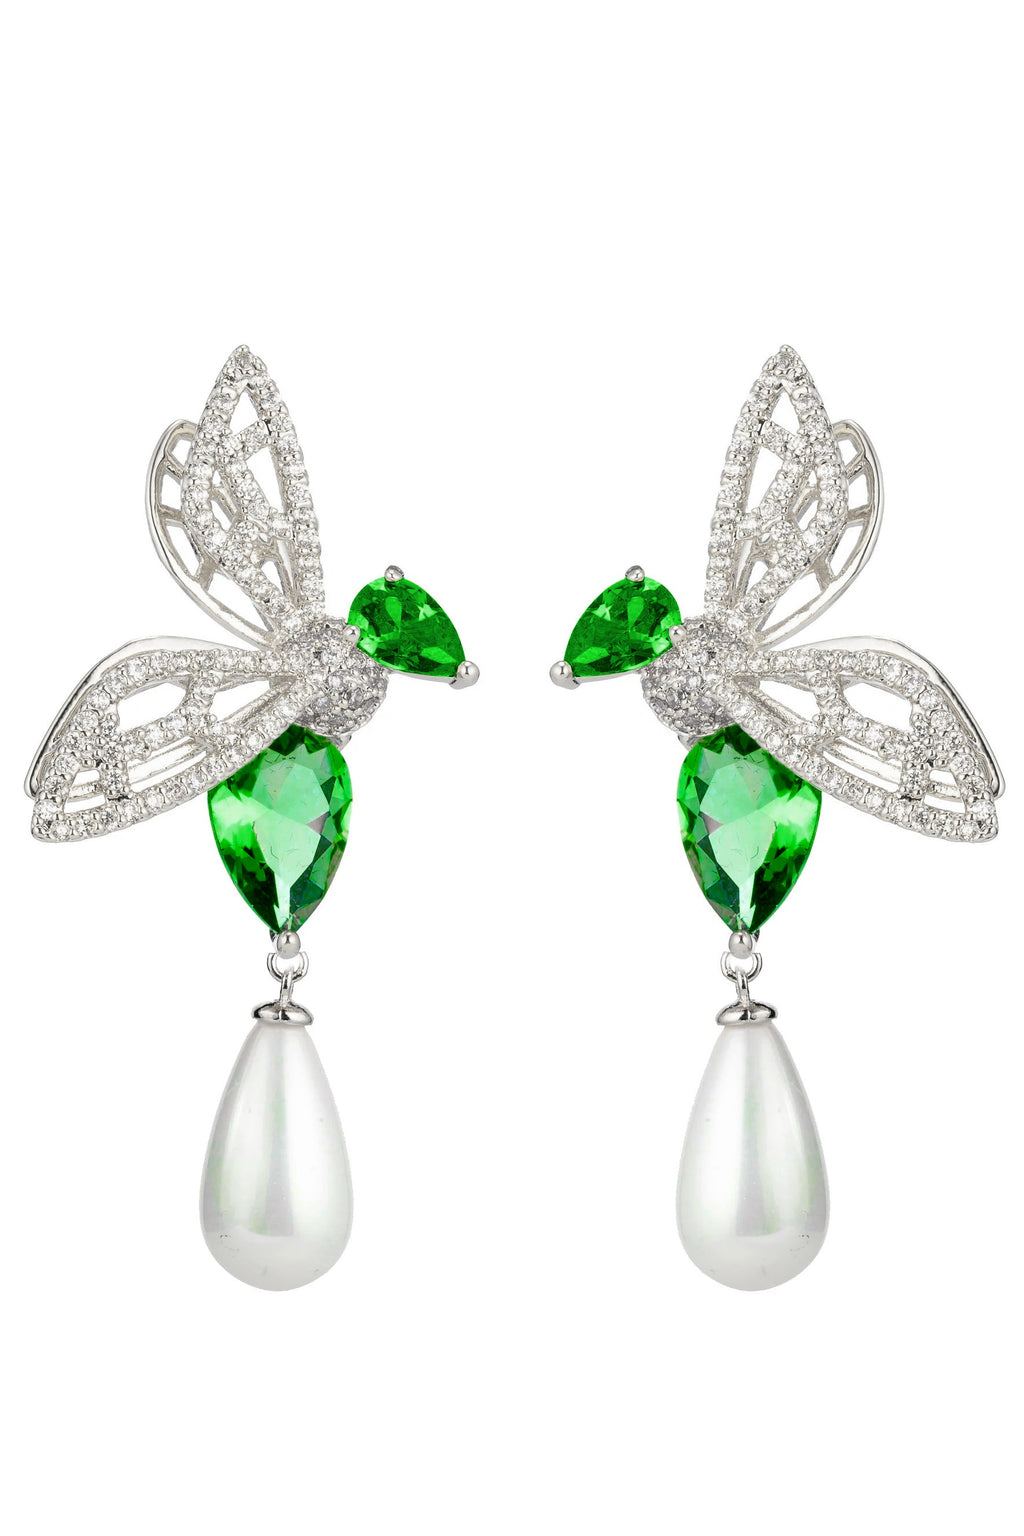 Pin by 猫猫爱吃鱼骨头on 灵感| Girly jewelry, Beautiful earrings, Sapphire jewelry